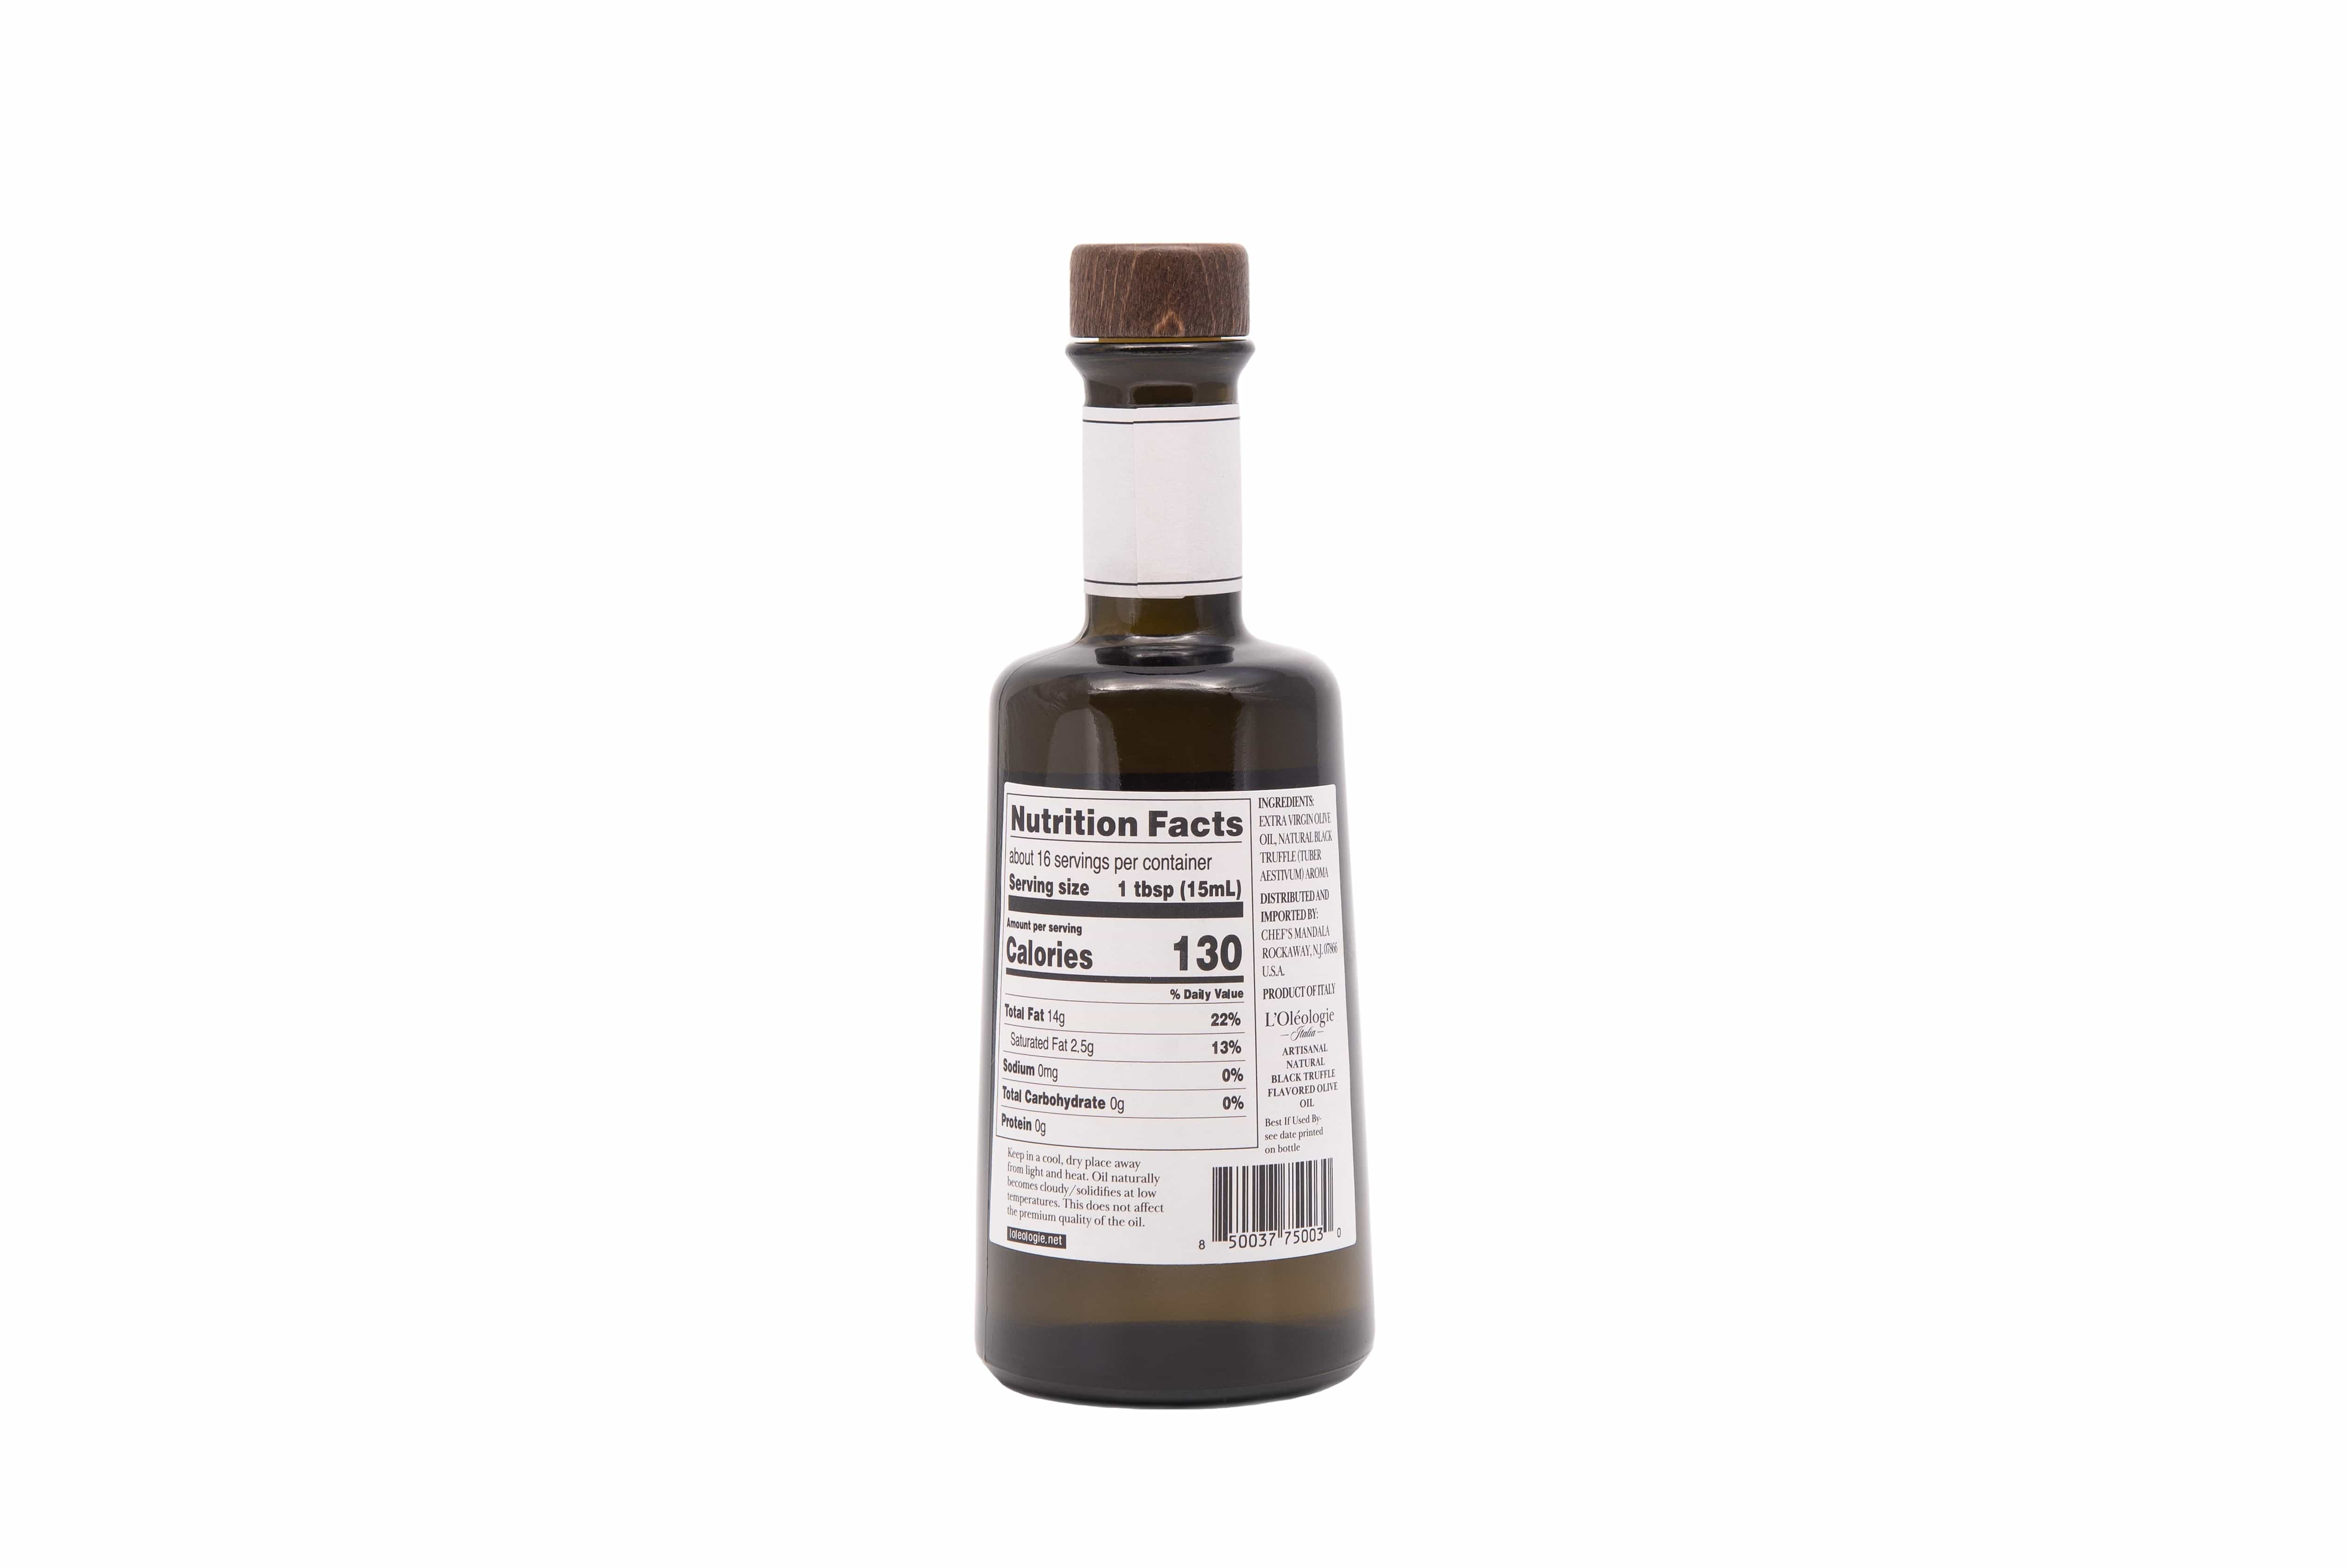 L'Olèologie - Italian Black Truffle Olive Oil 250 ml